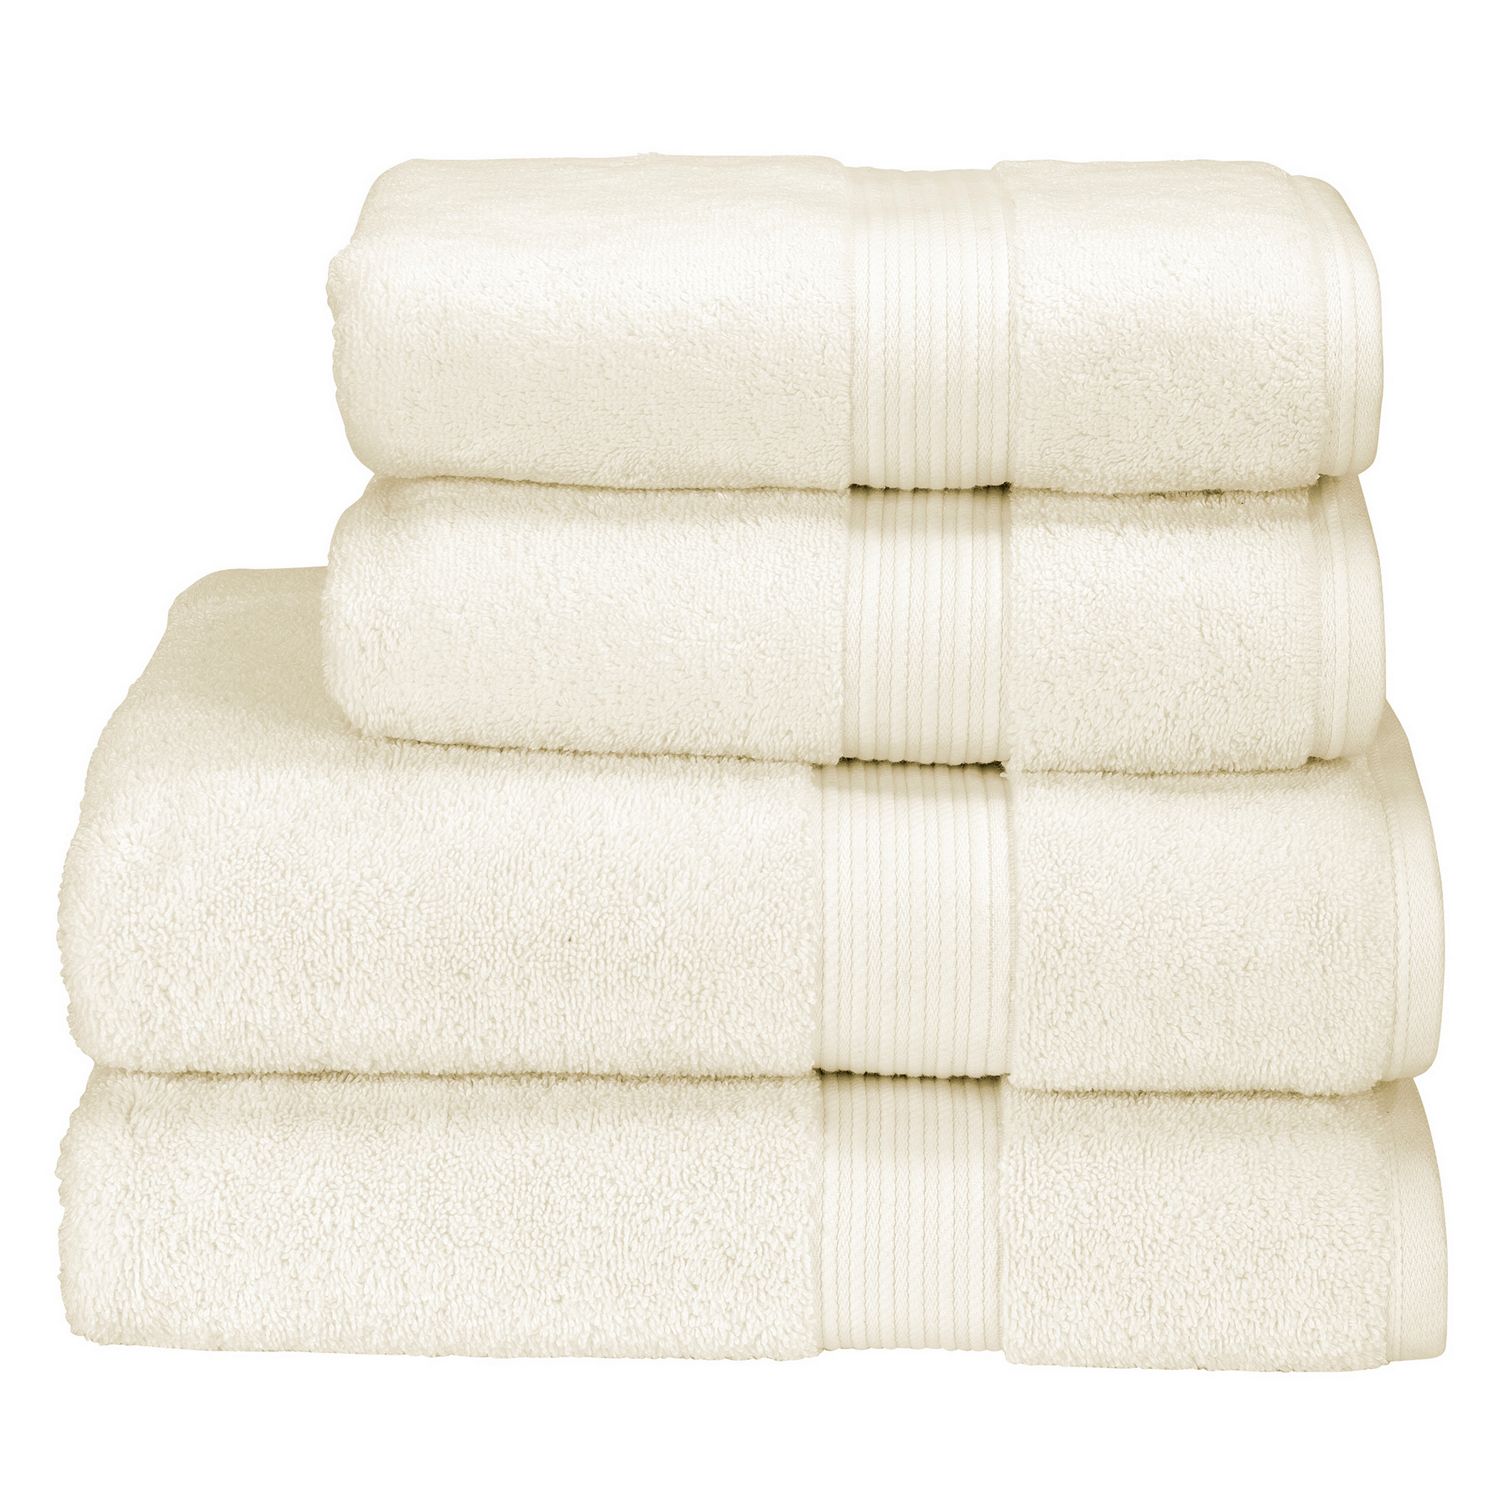 Christy England Supreme Bath Towels